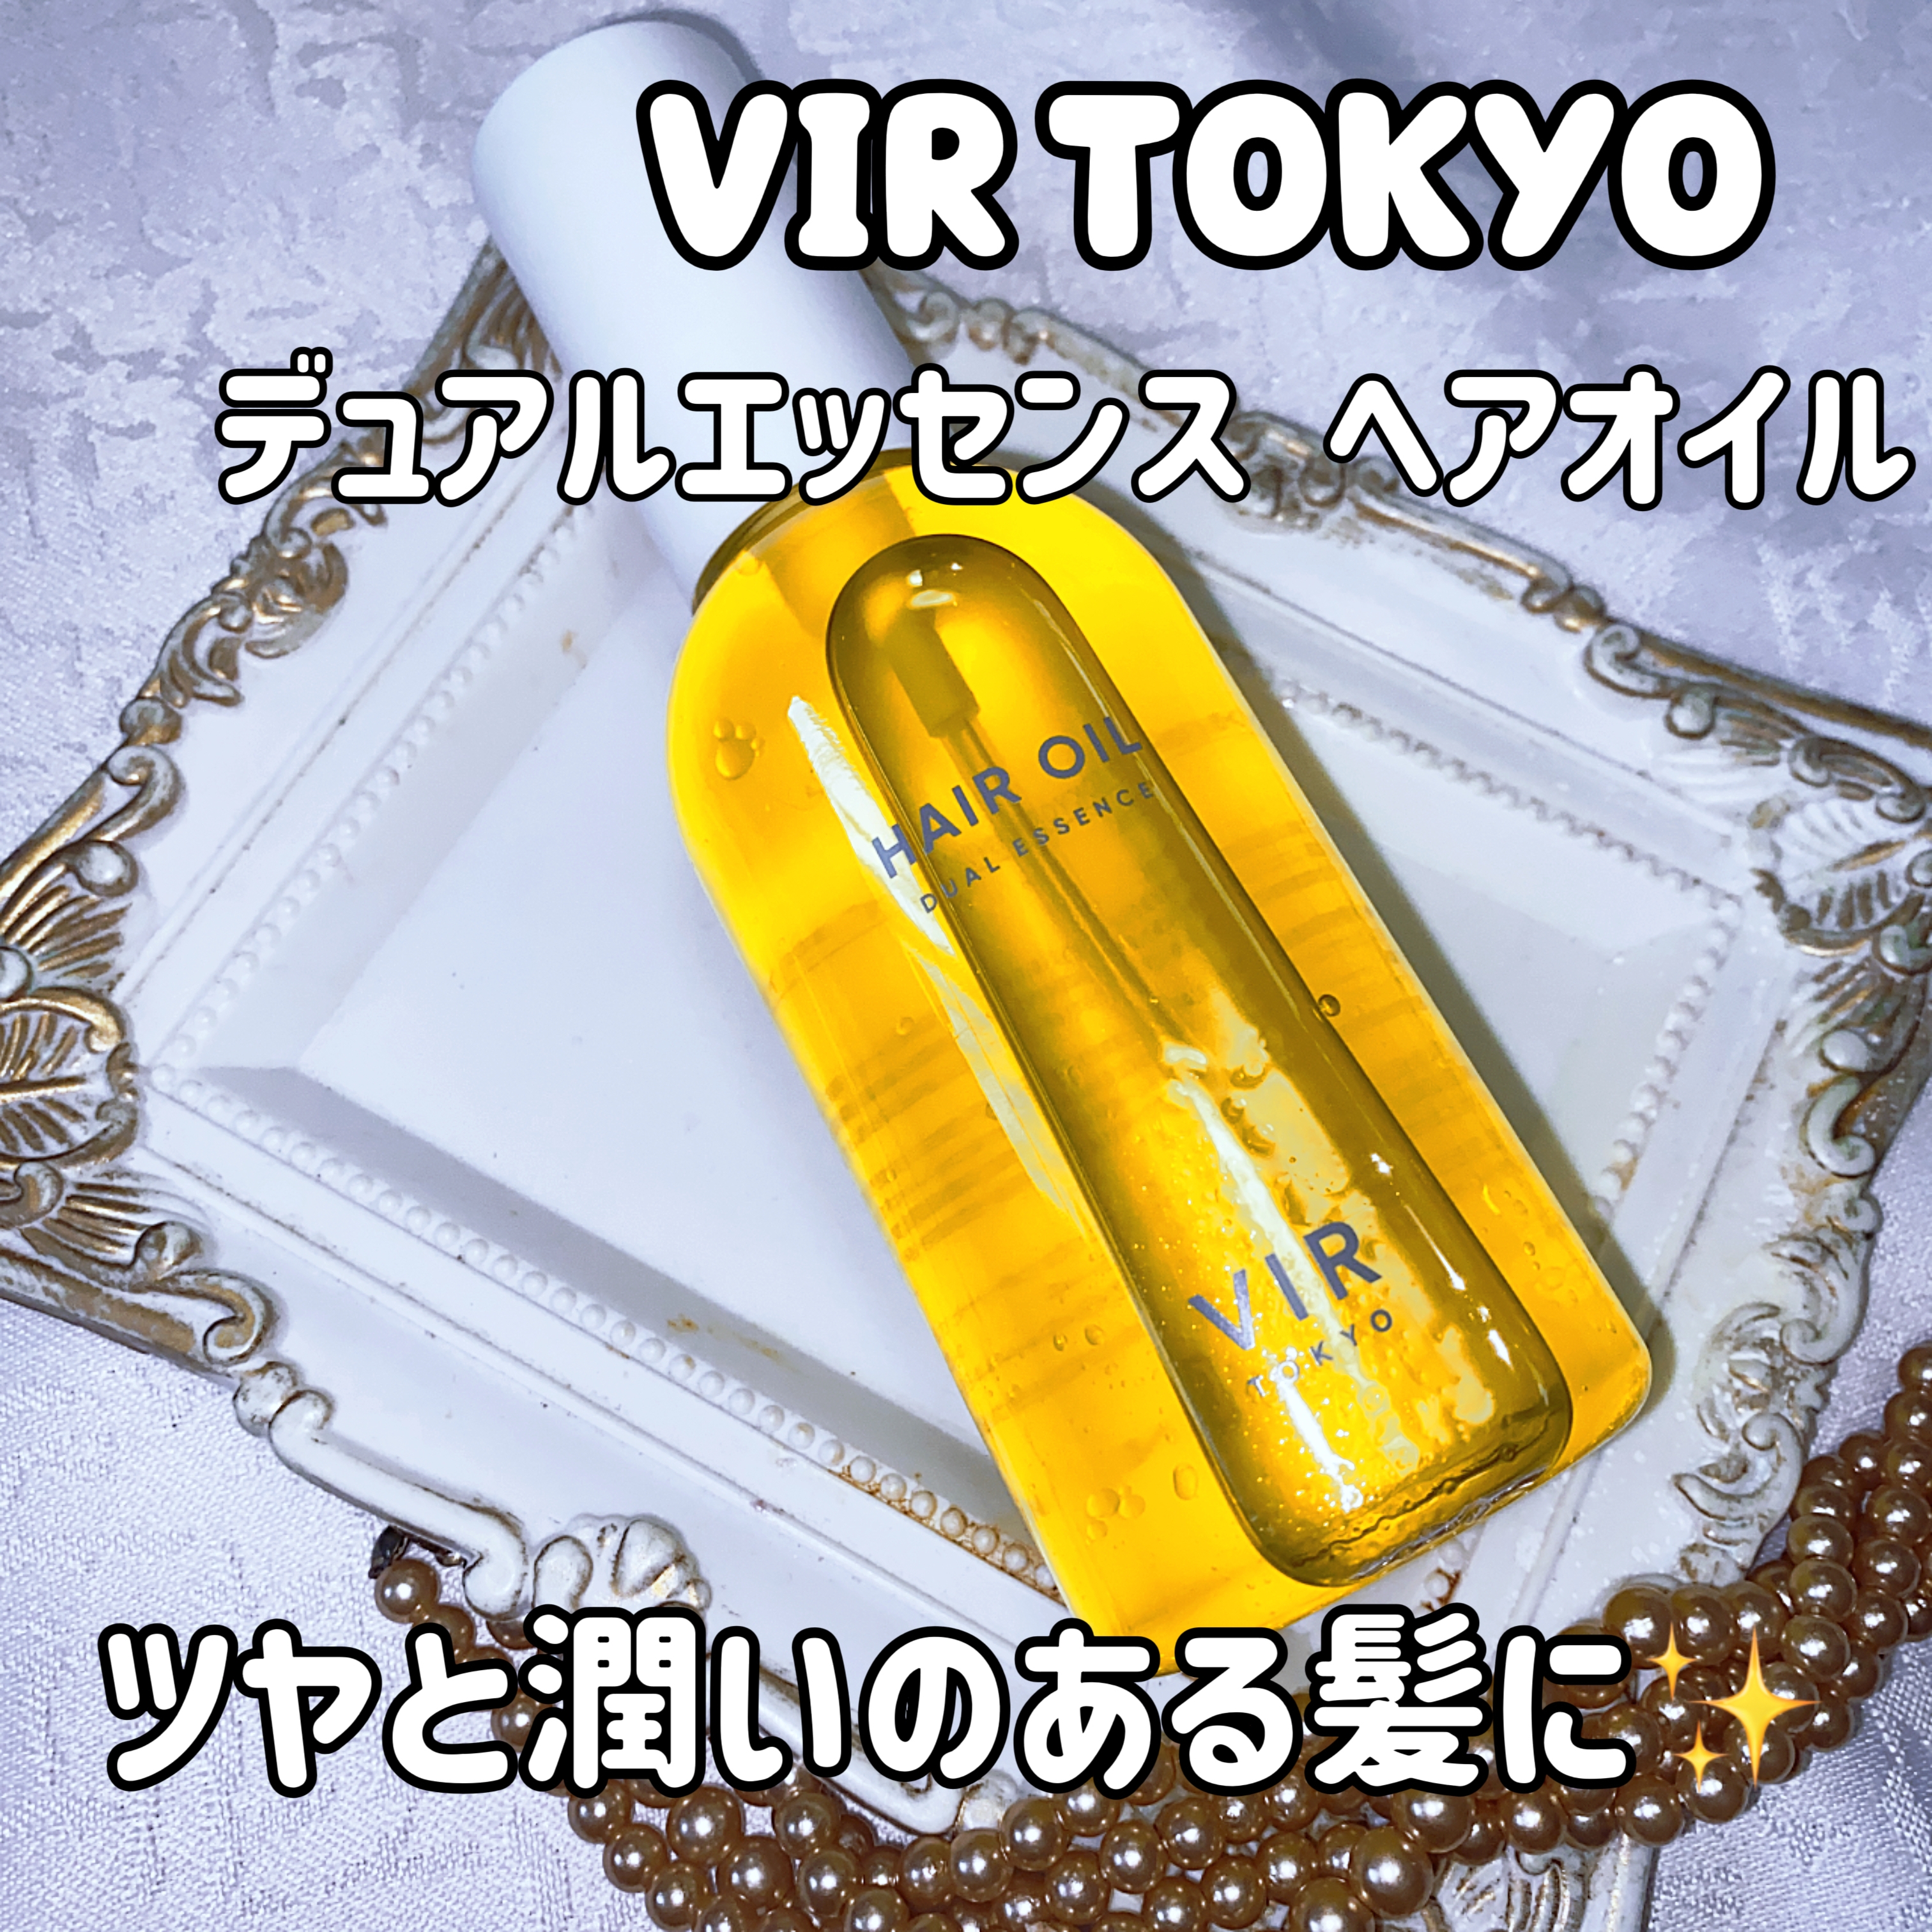 VIR TOKYO(ブイアイアール トウキョウ) ヘアオイル DUAL ESSENSEの良い点・メリットに関する珈琲豆♡さんの口コミ画像1